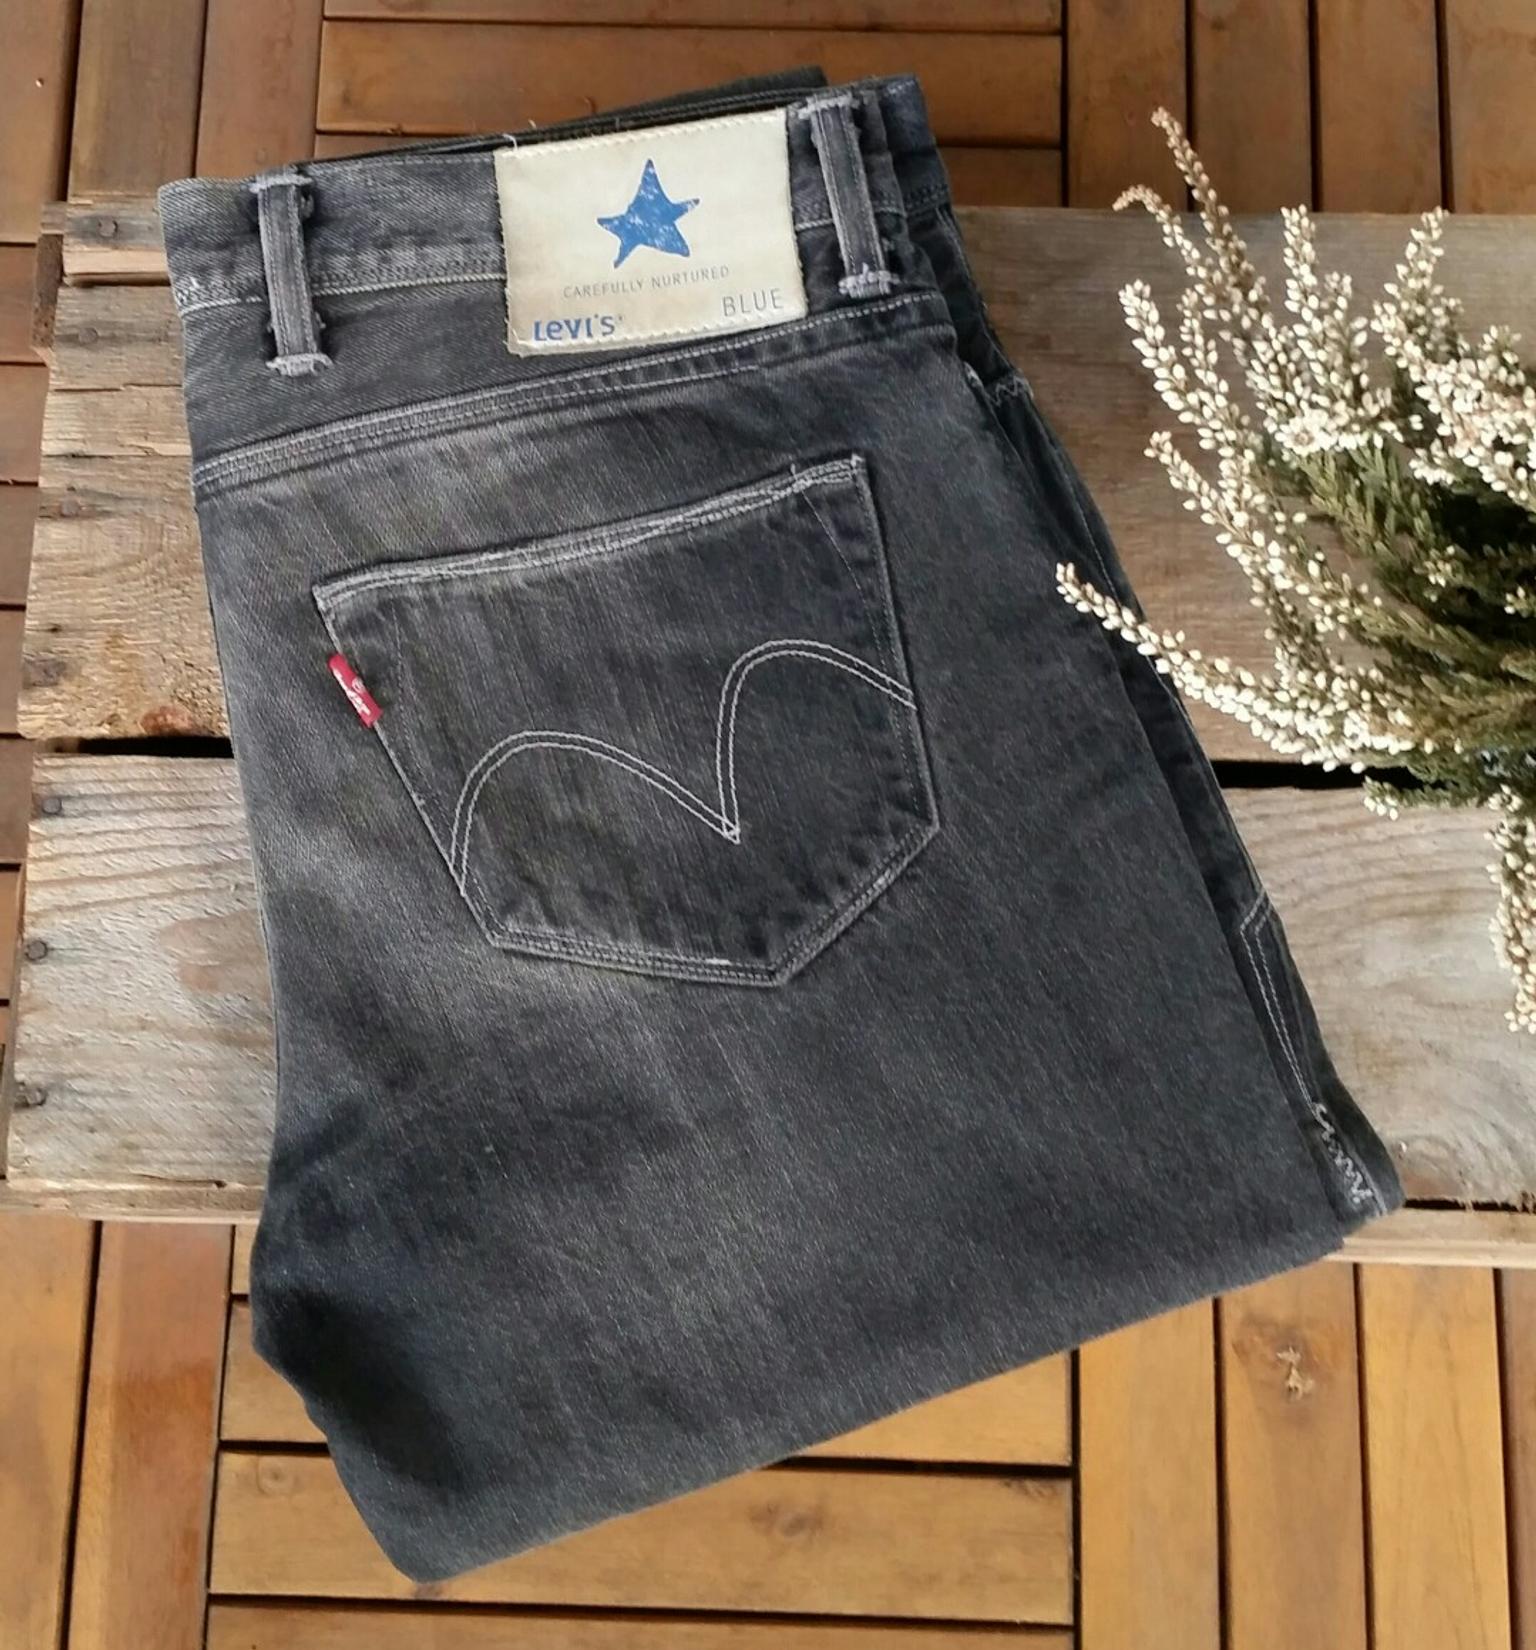 levis blue star jeans